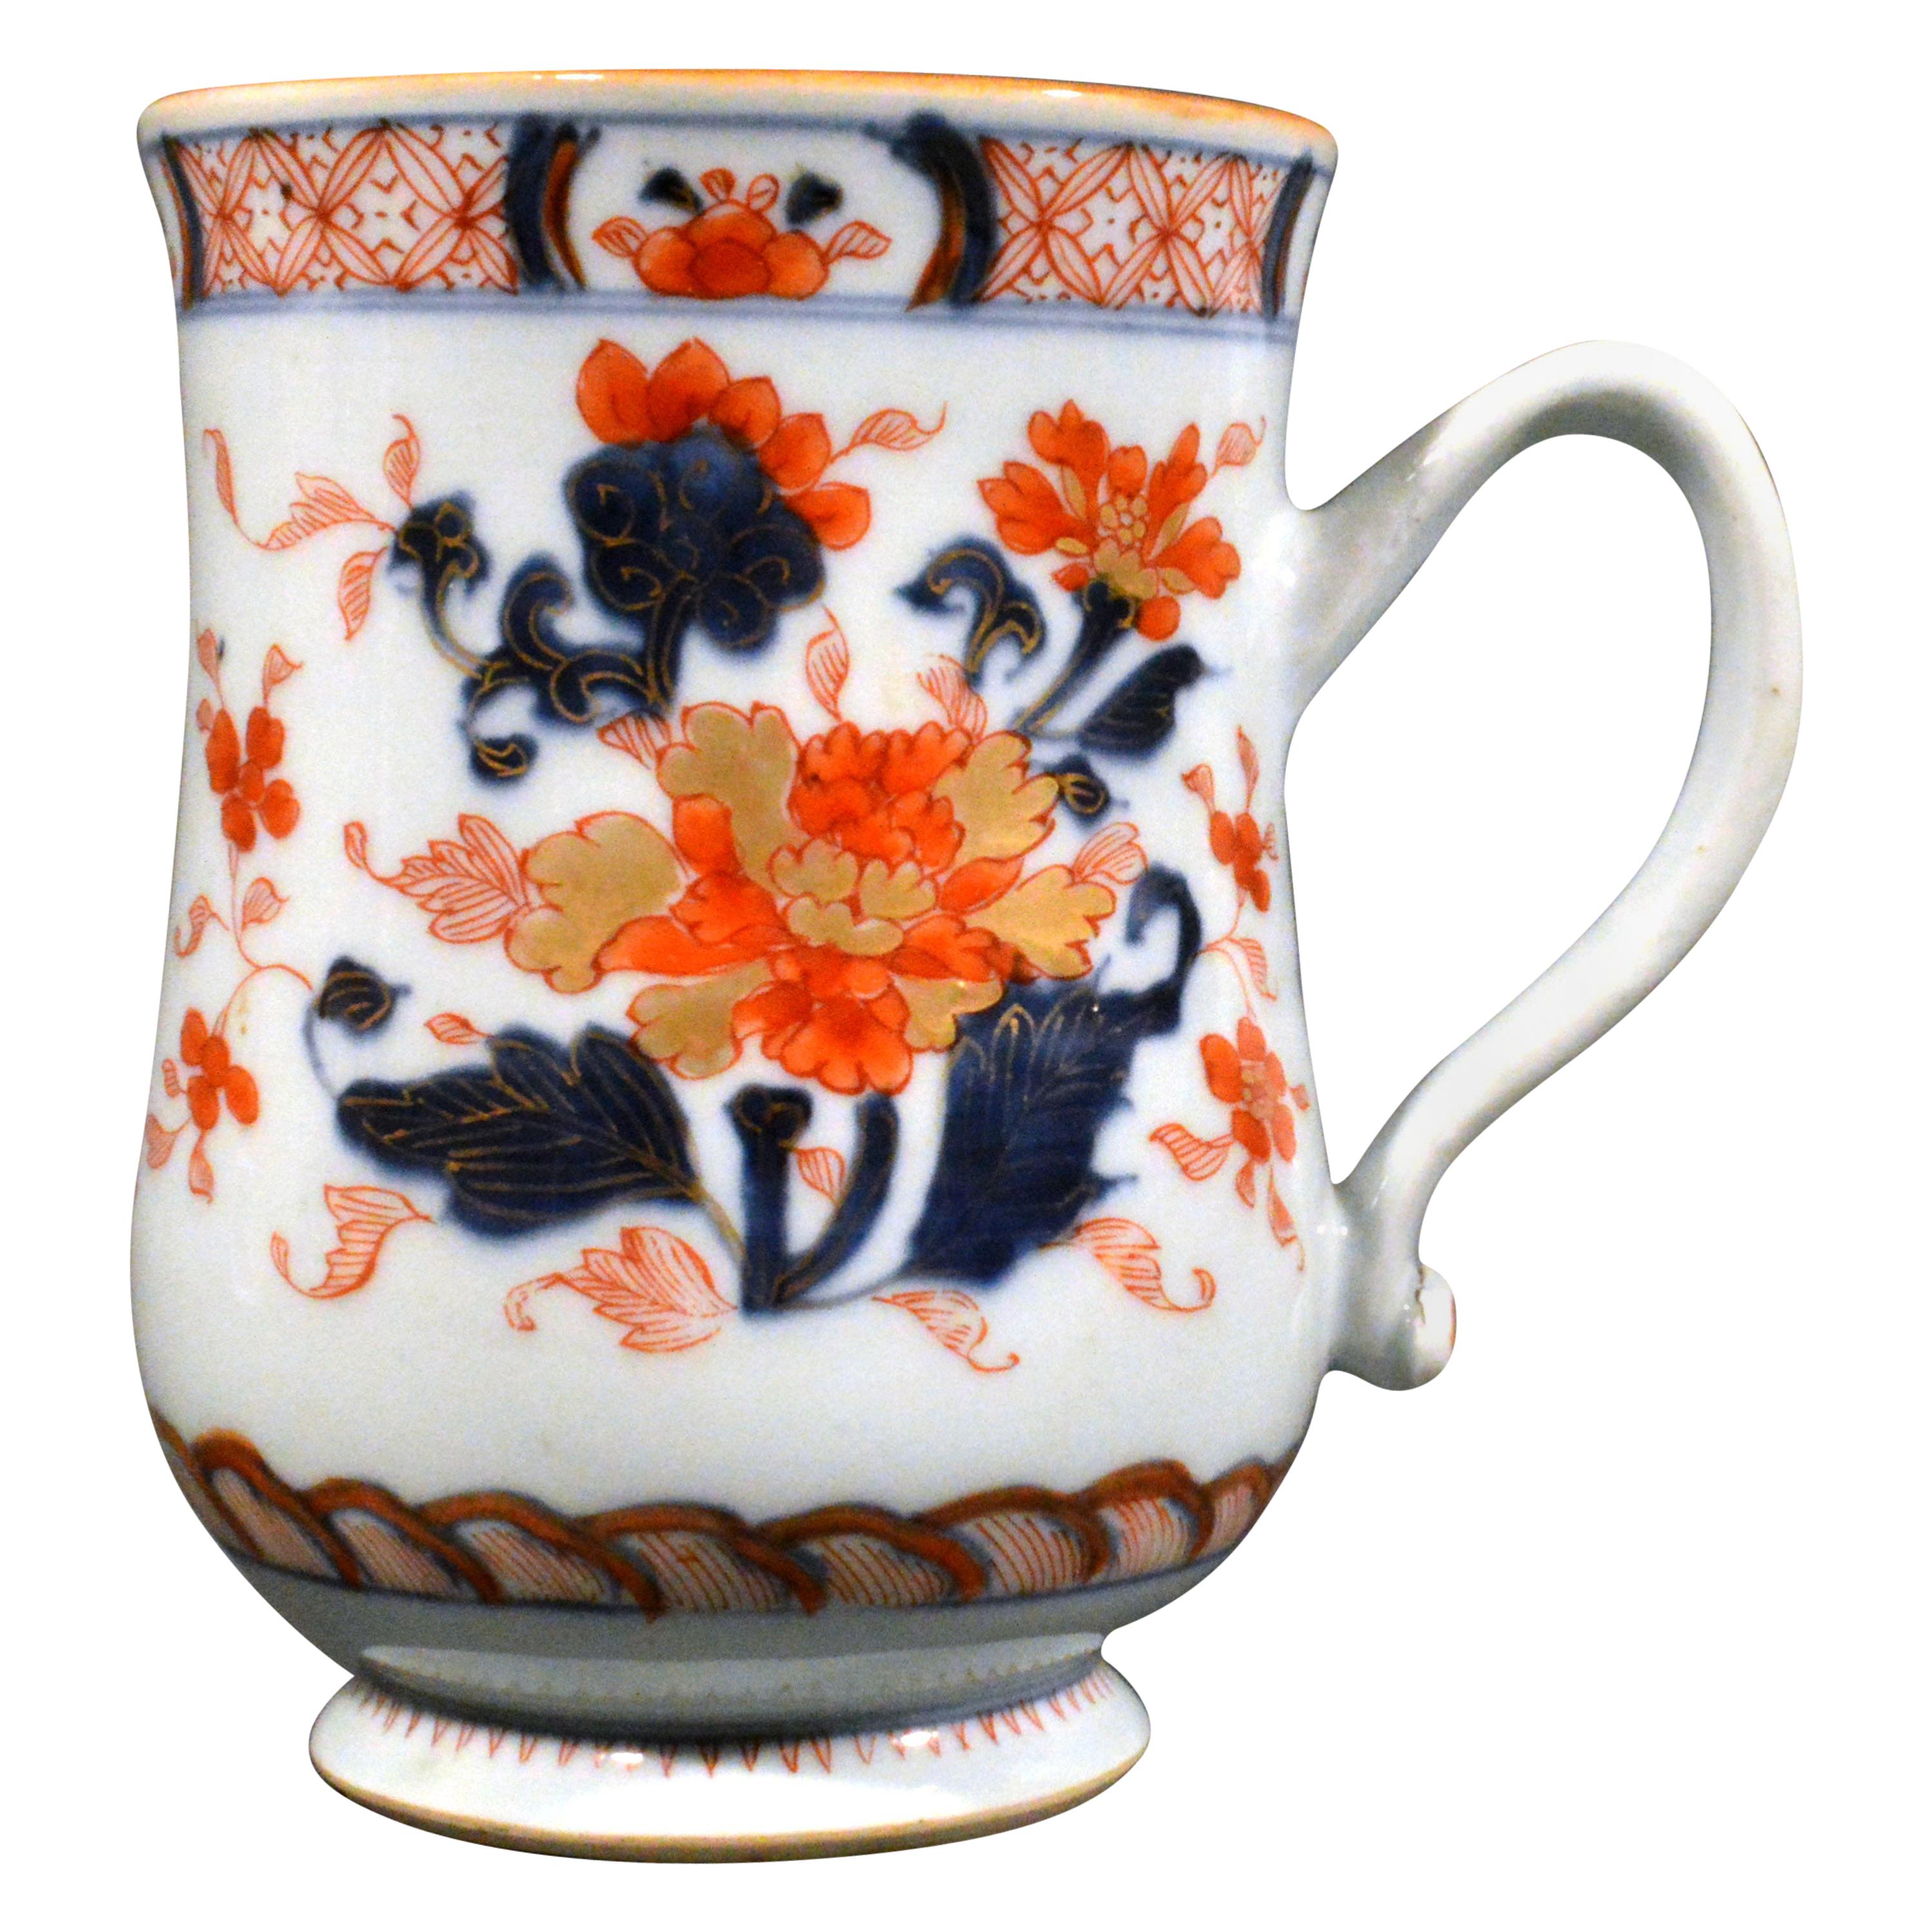 Chinese Export Porcelain Imari Bell-Shaped Large Tankard, circa 1740